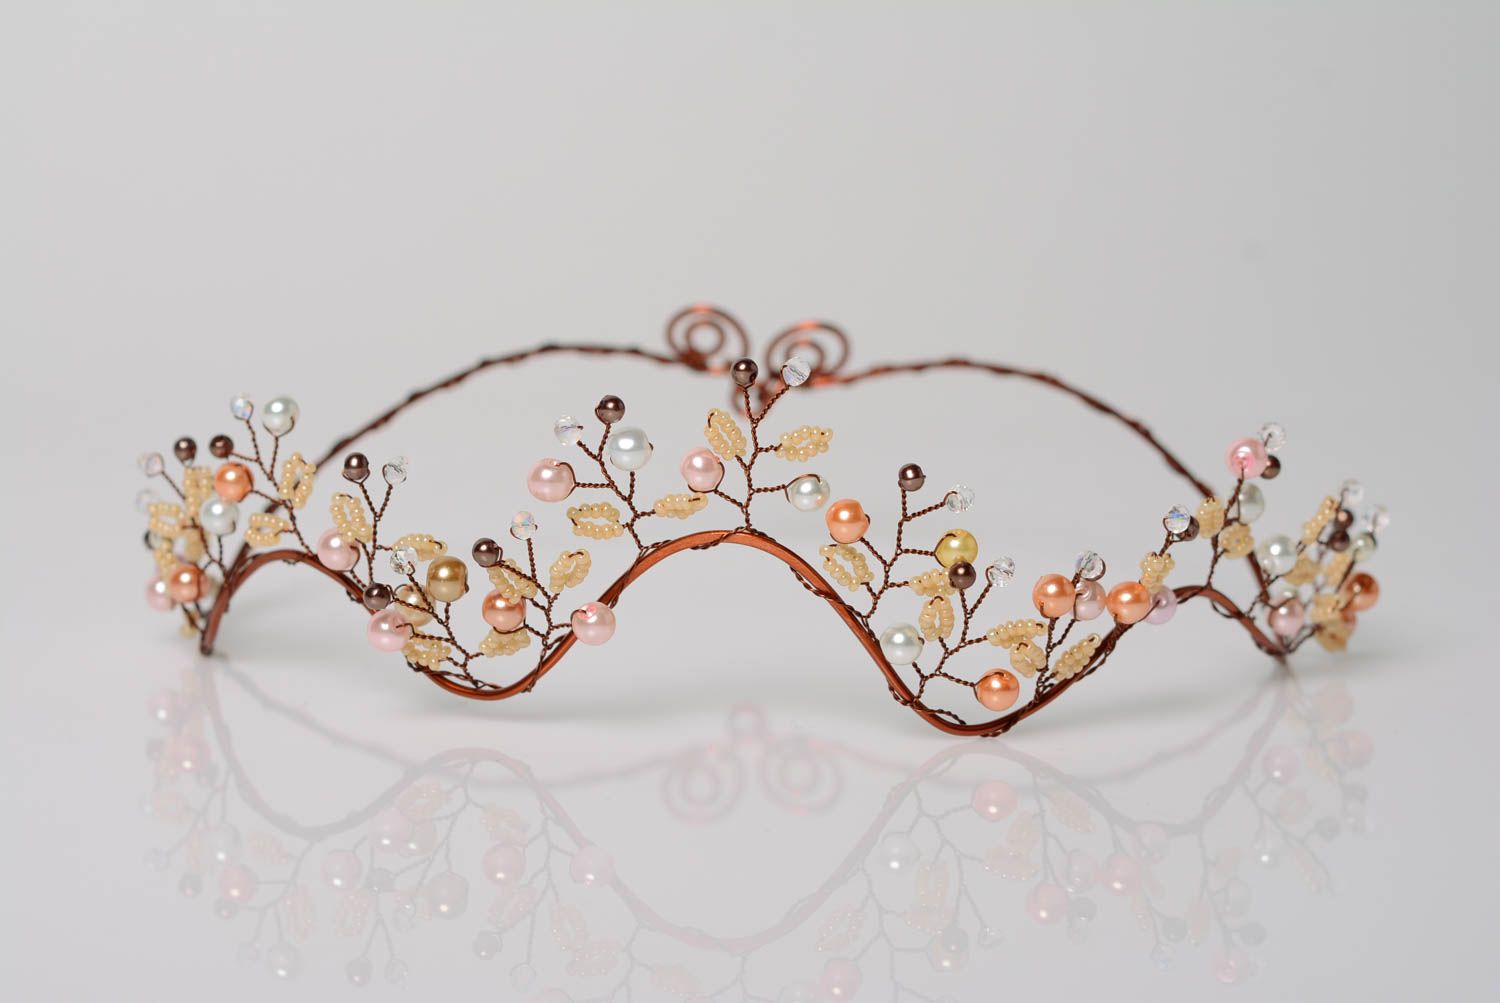 Handmade elegant woven metal wire tiara with beads beautiful hair accessory photo 1